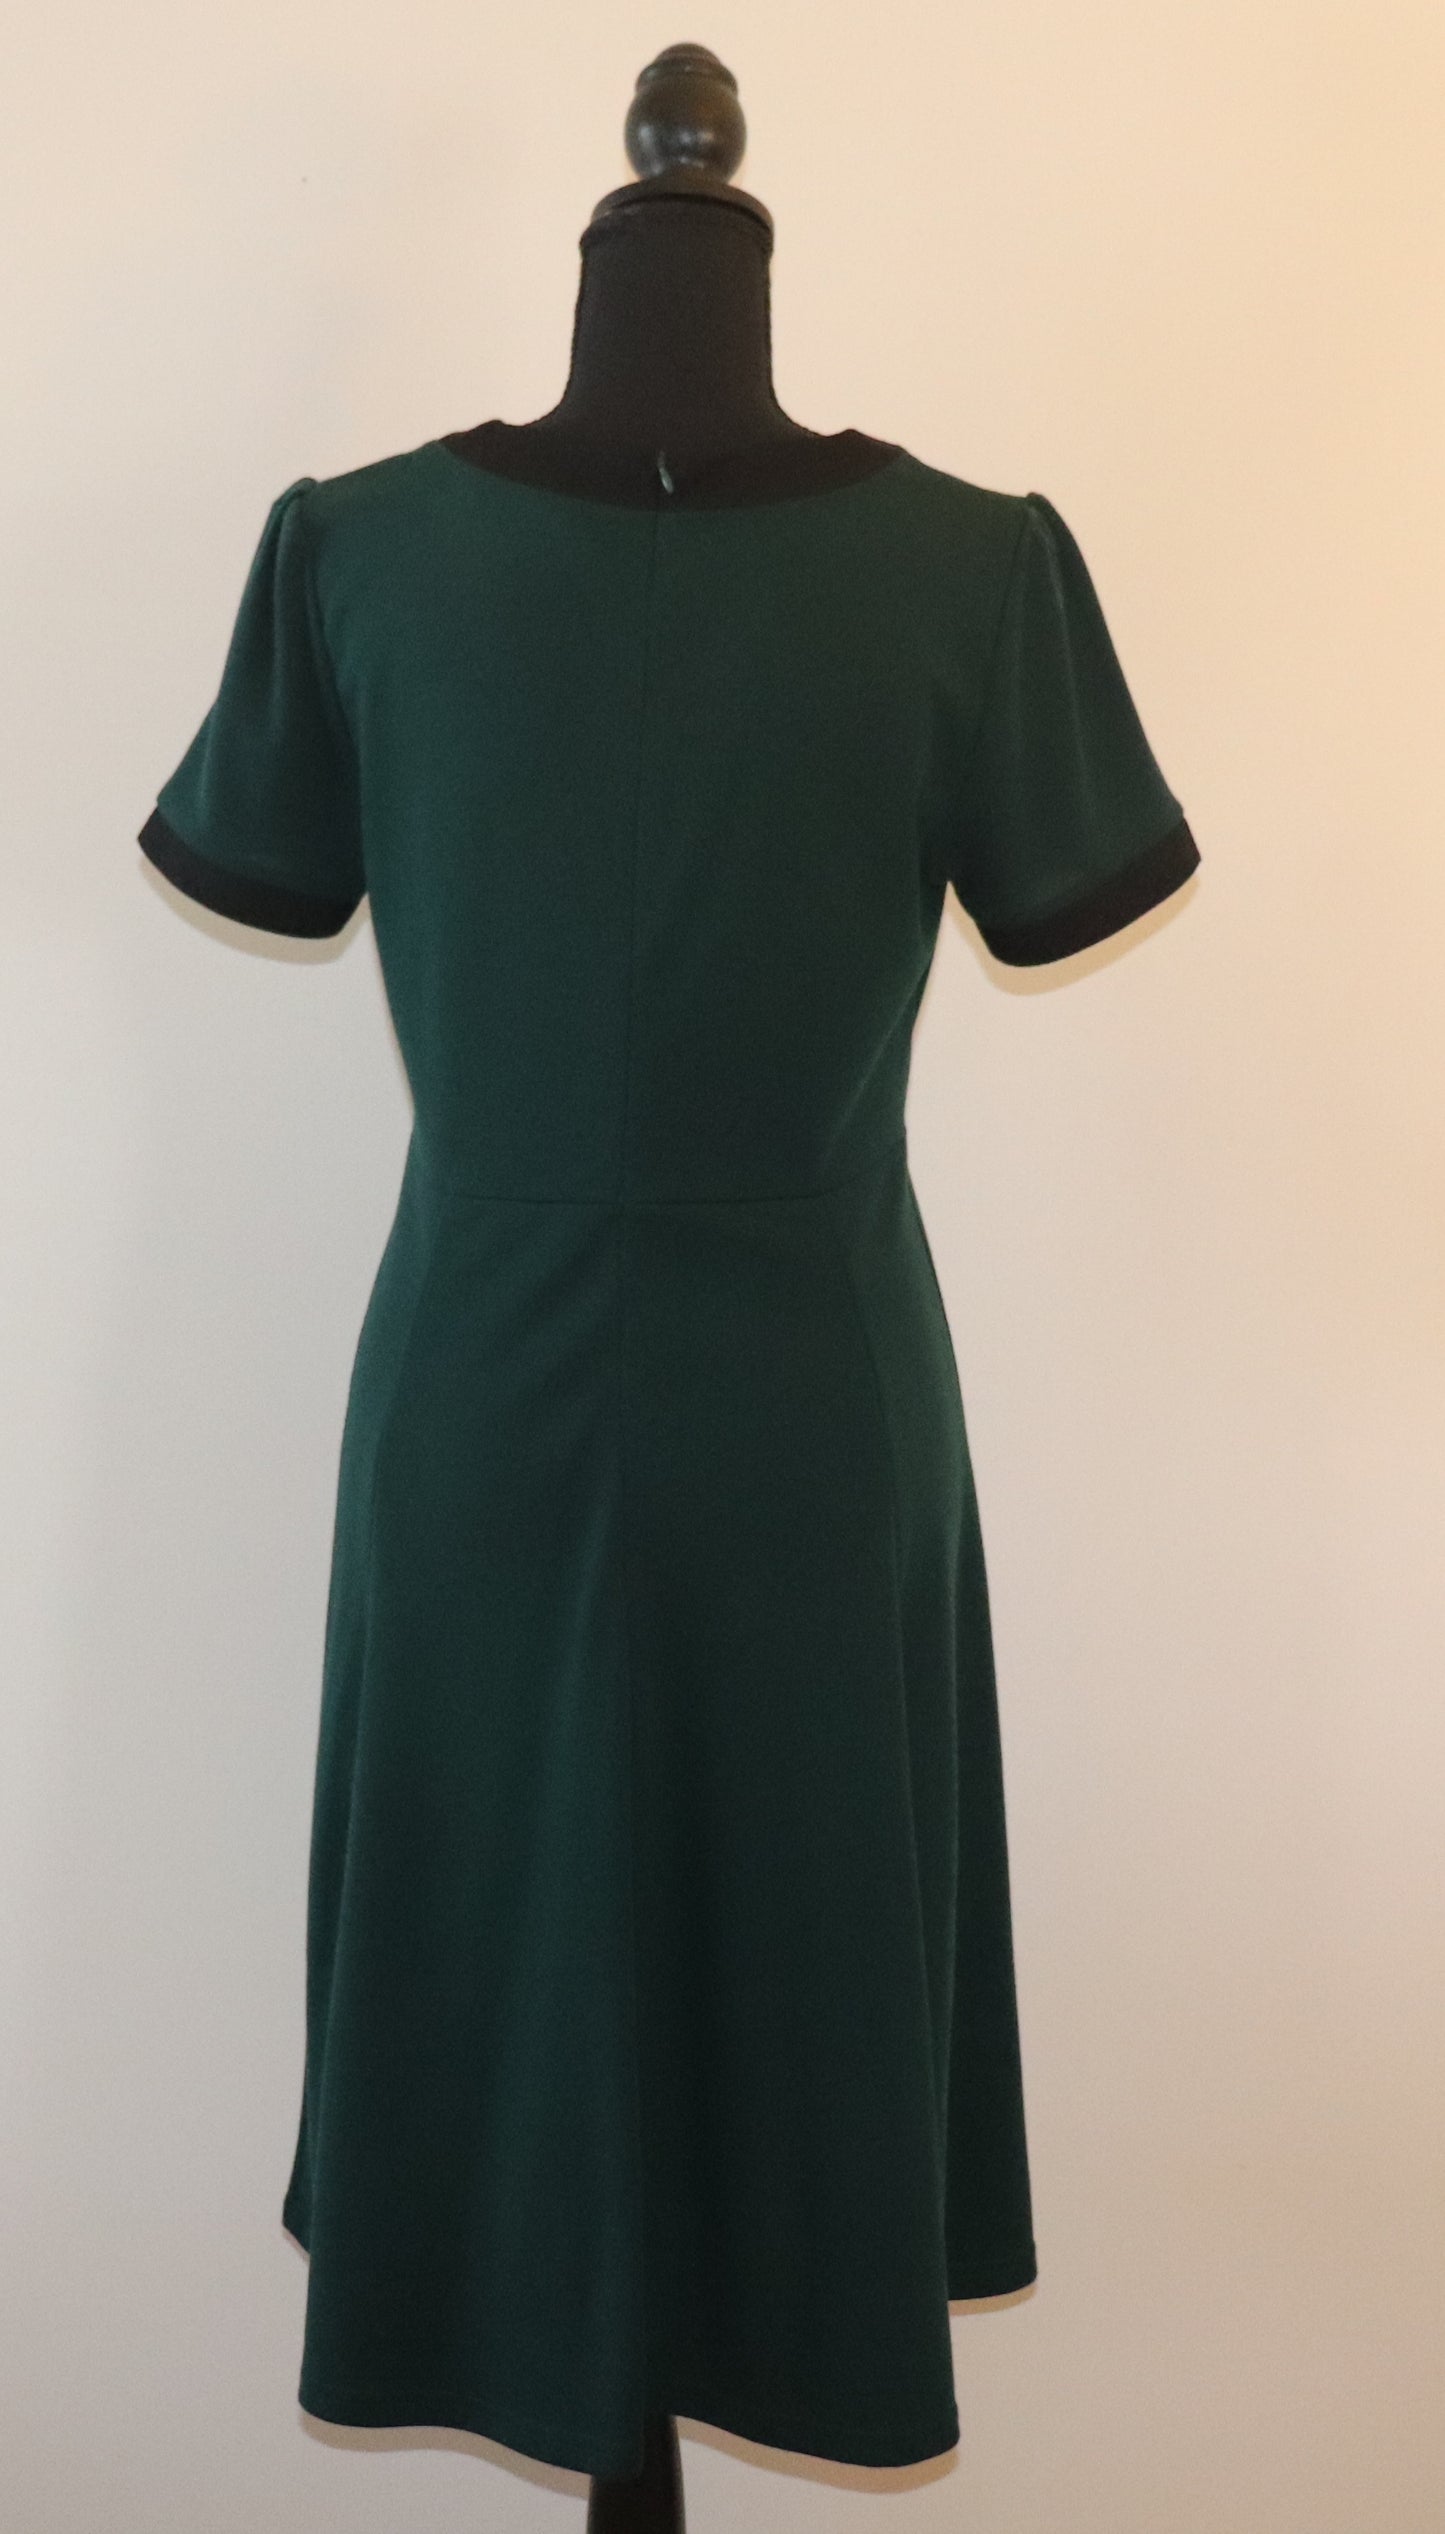 Size Large CaiDieNu Green Dress